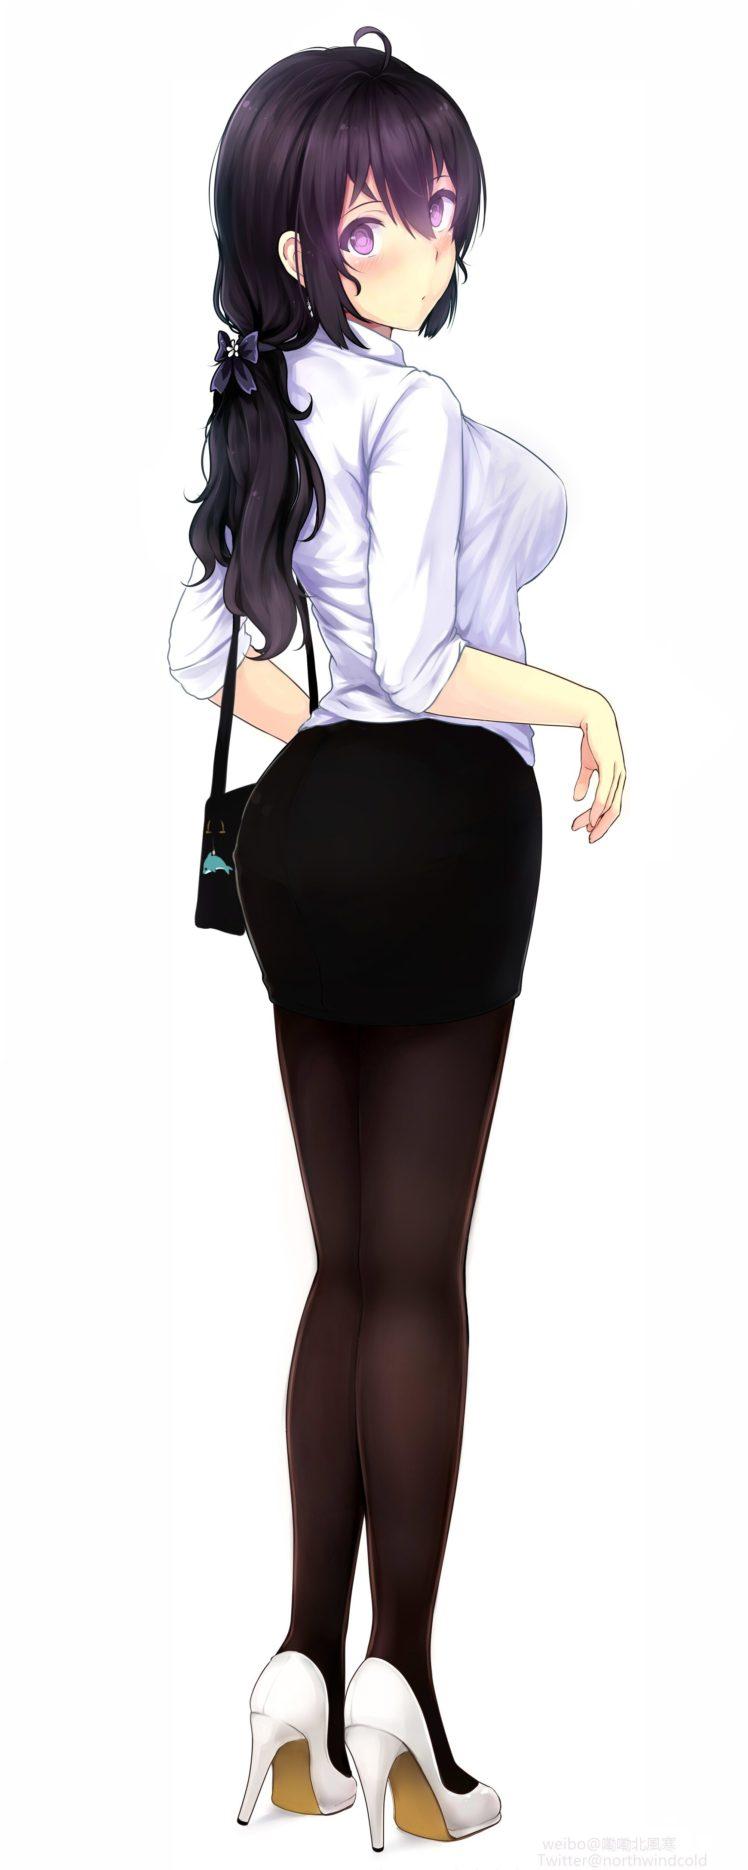 long hair, Purple eyes, Anime, Anime girls, Skirt, Stockings